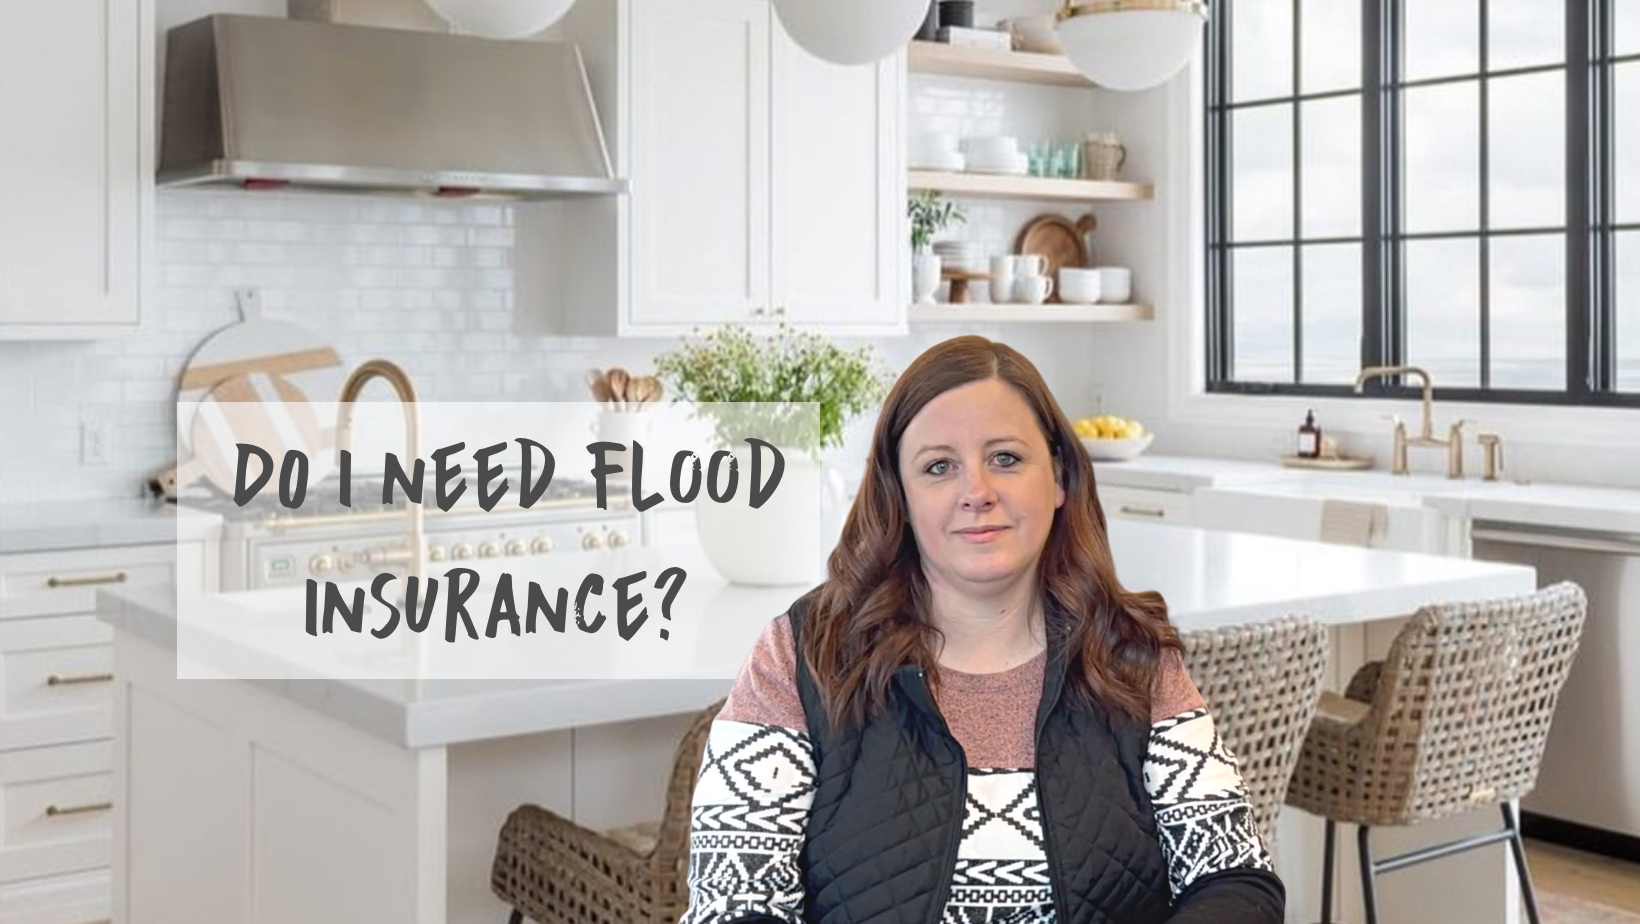 Video Tutorial with Kristina explaining flood Insurance